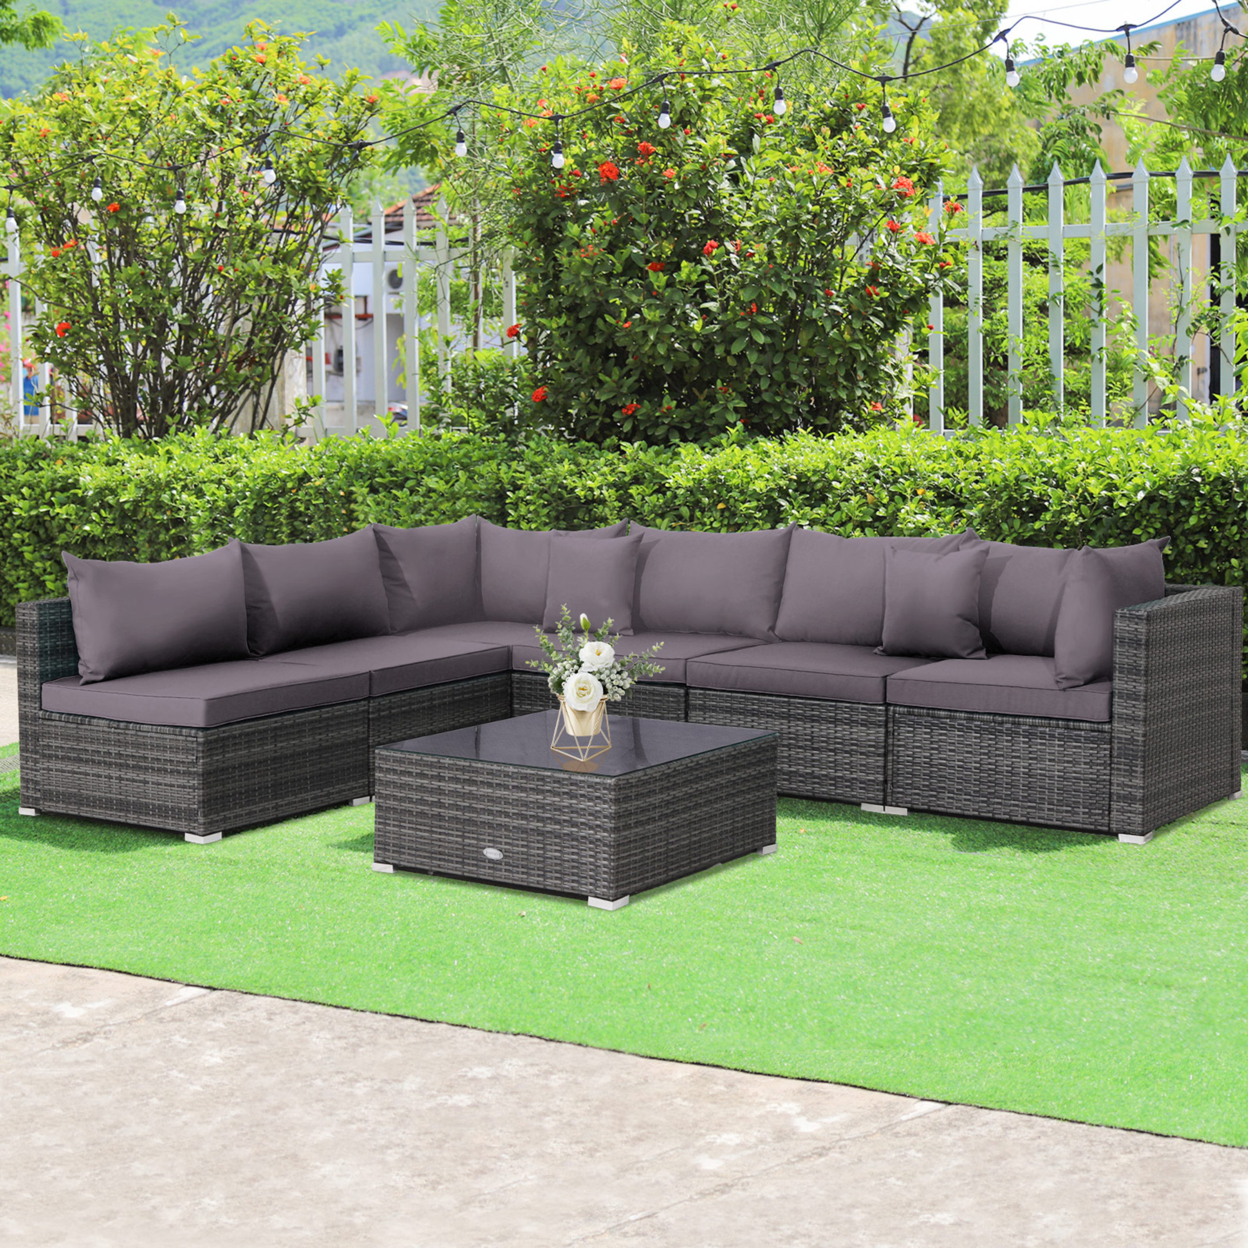 7PCS Patio Rattan Sectional Sofa Set Outdoor Furniture Set W/ Cushions - Turquoise